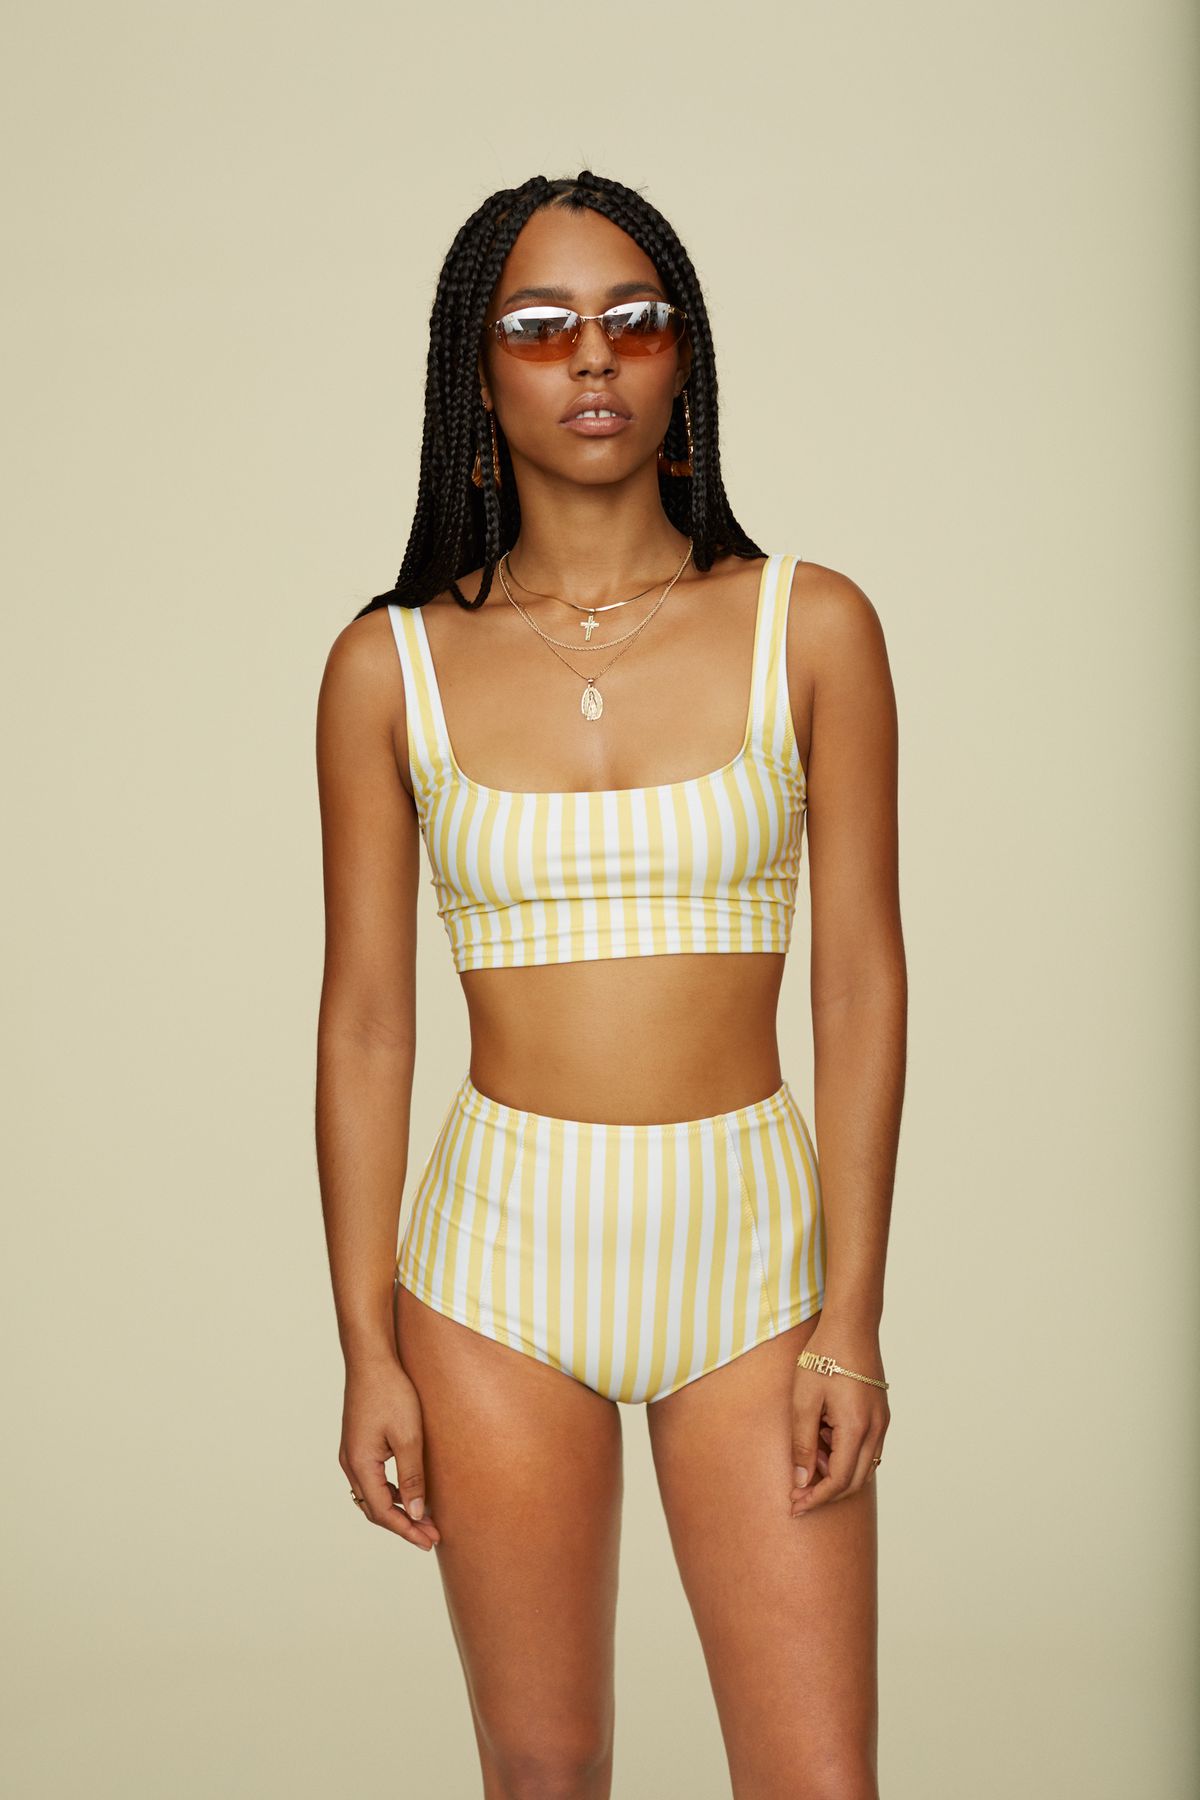 A model wearing a white and yellow striped bikini